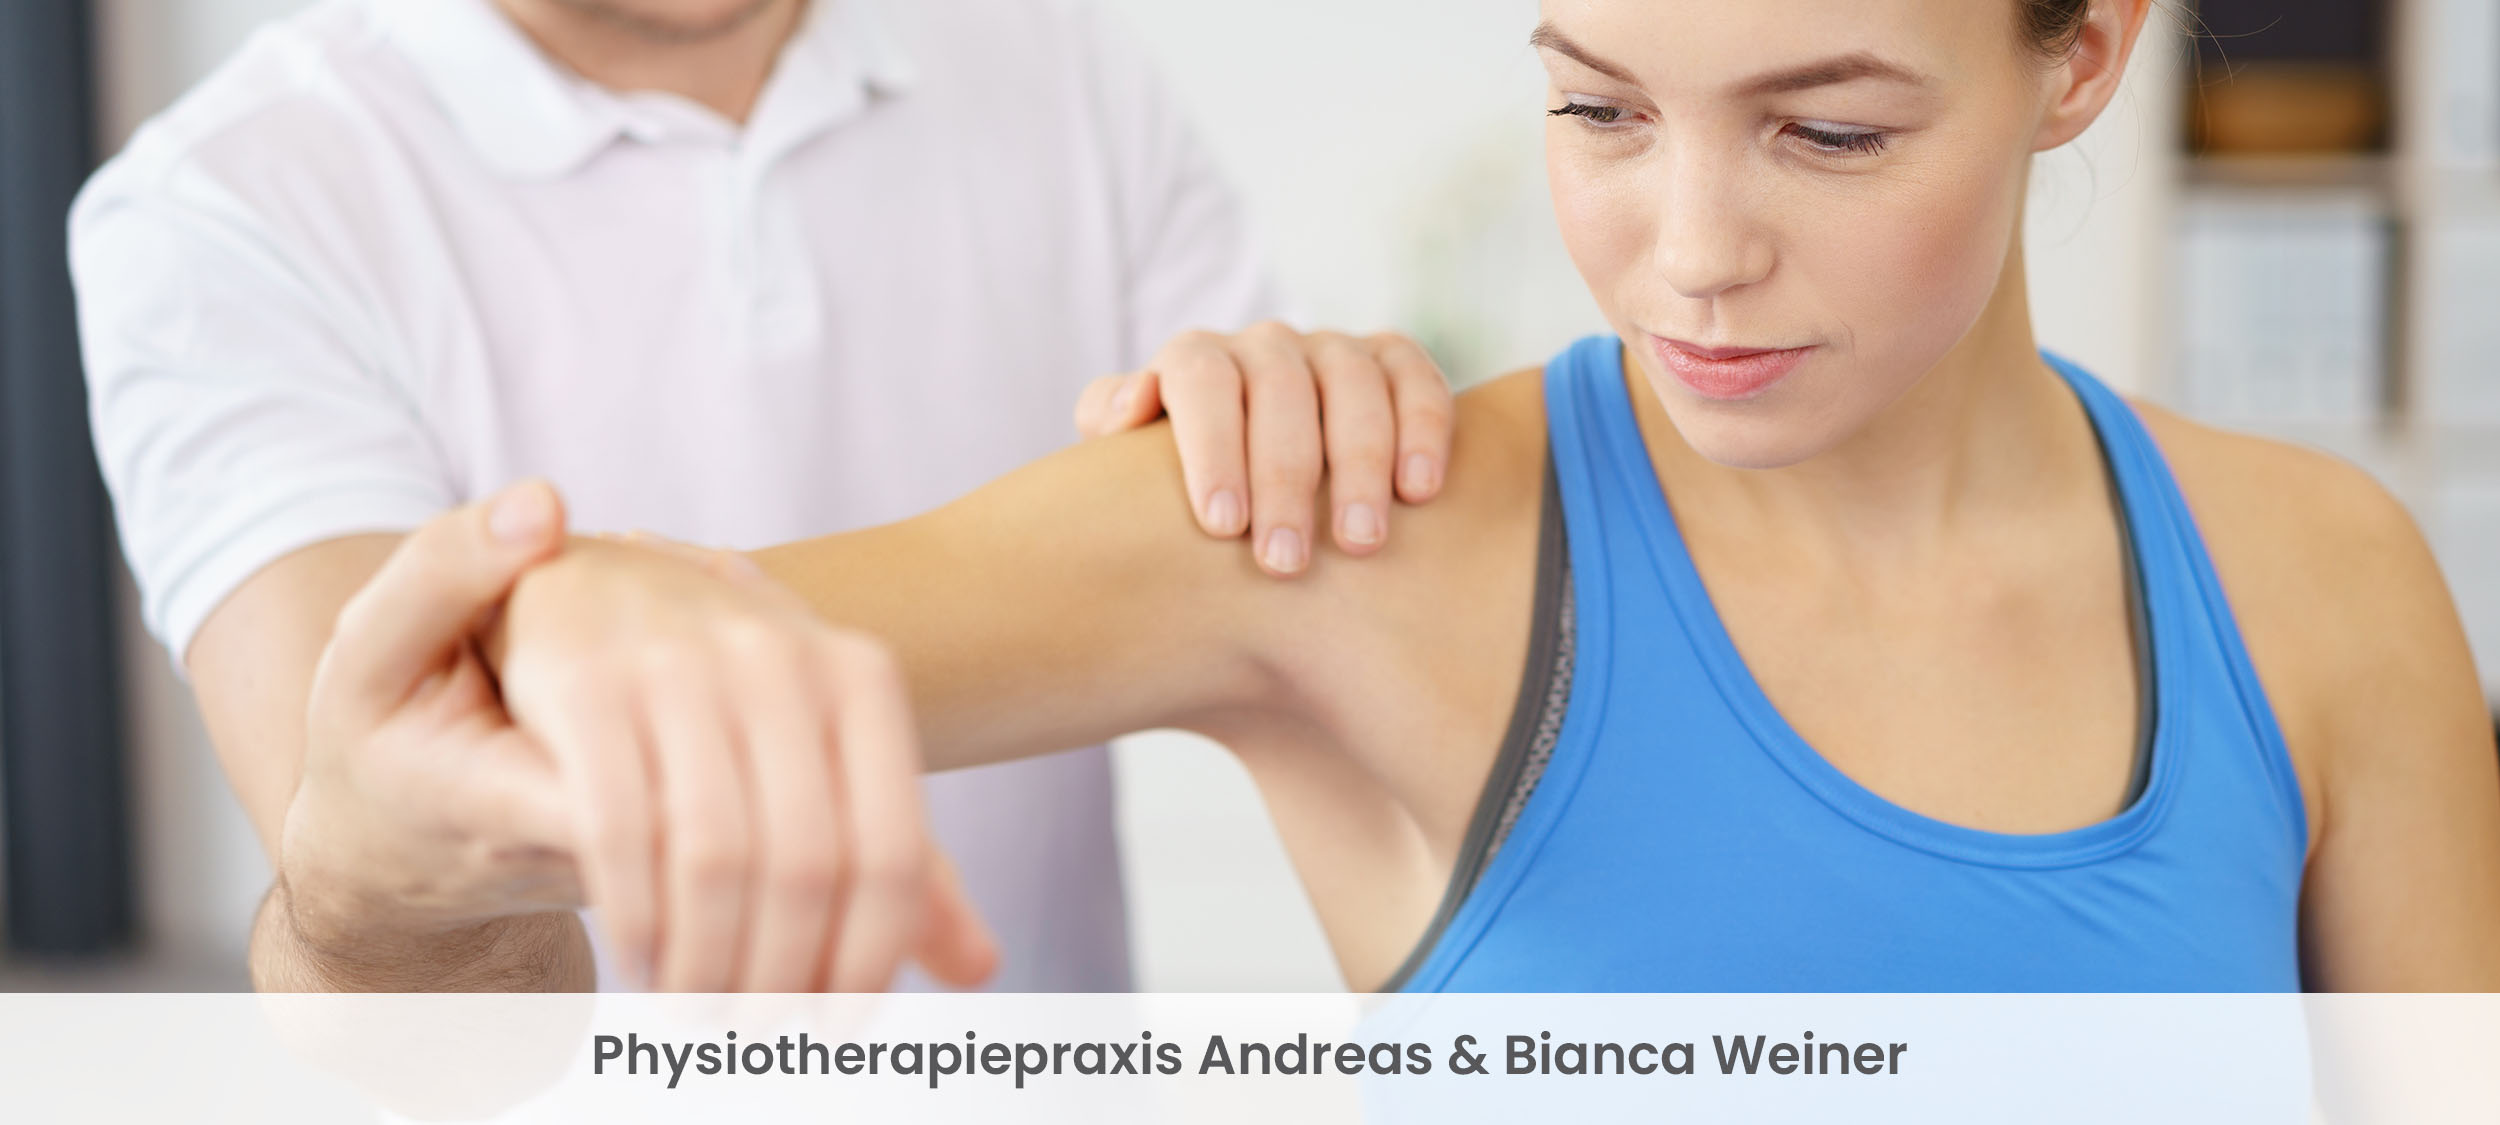 Physiotherapiepraxis Andreas & Bianca Weiner | Header 1